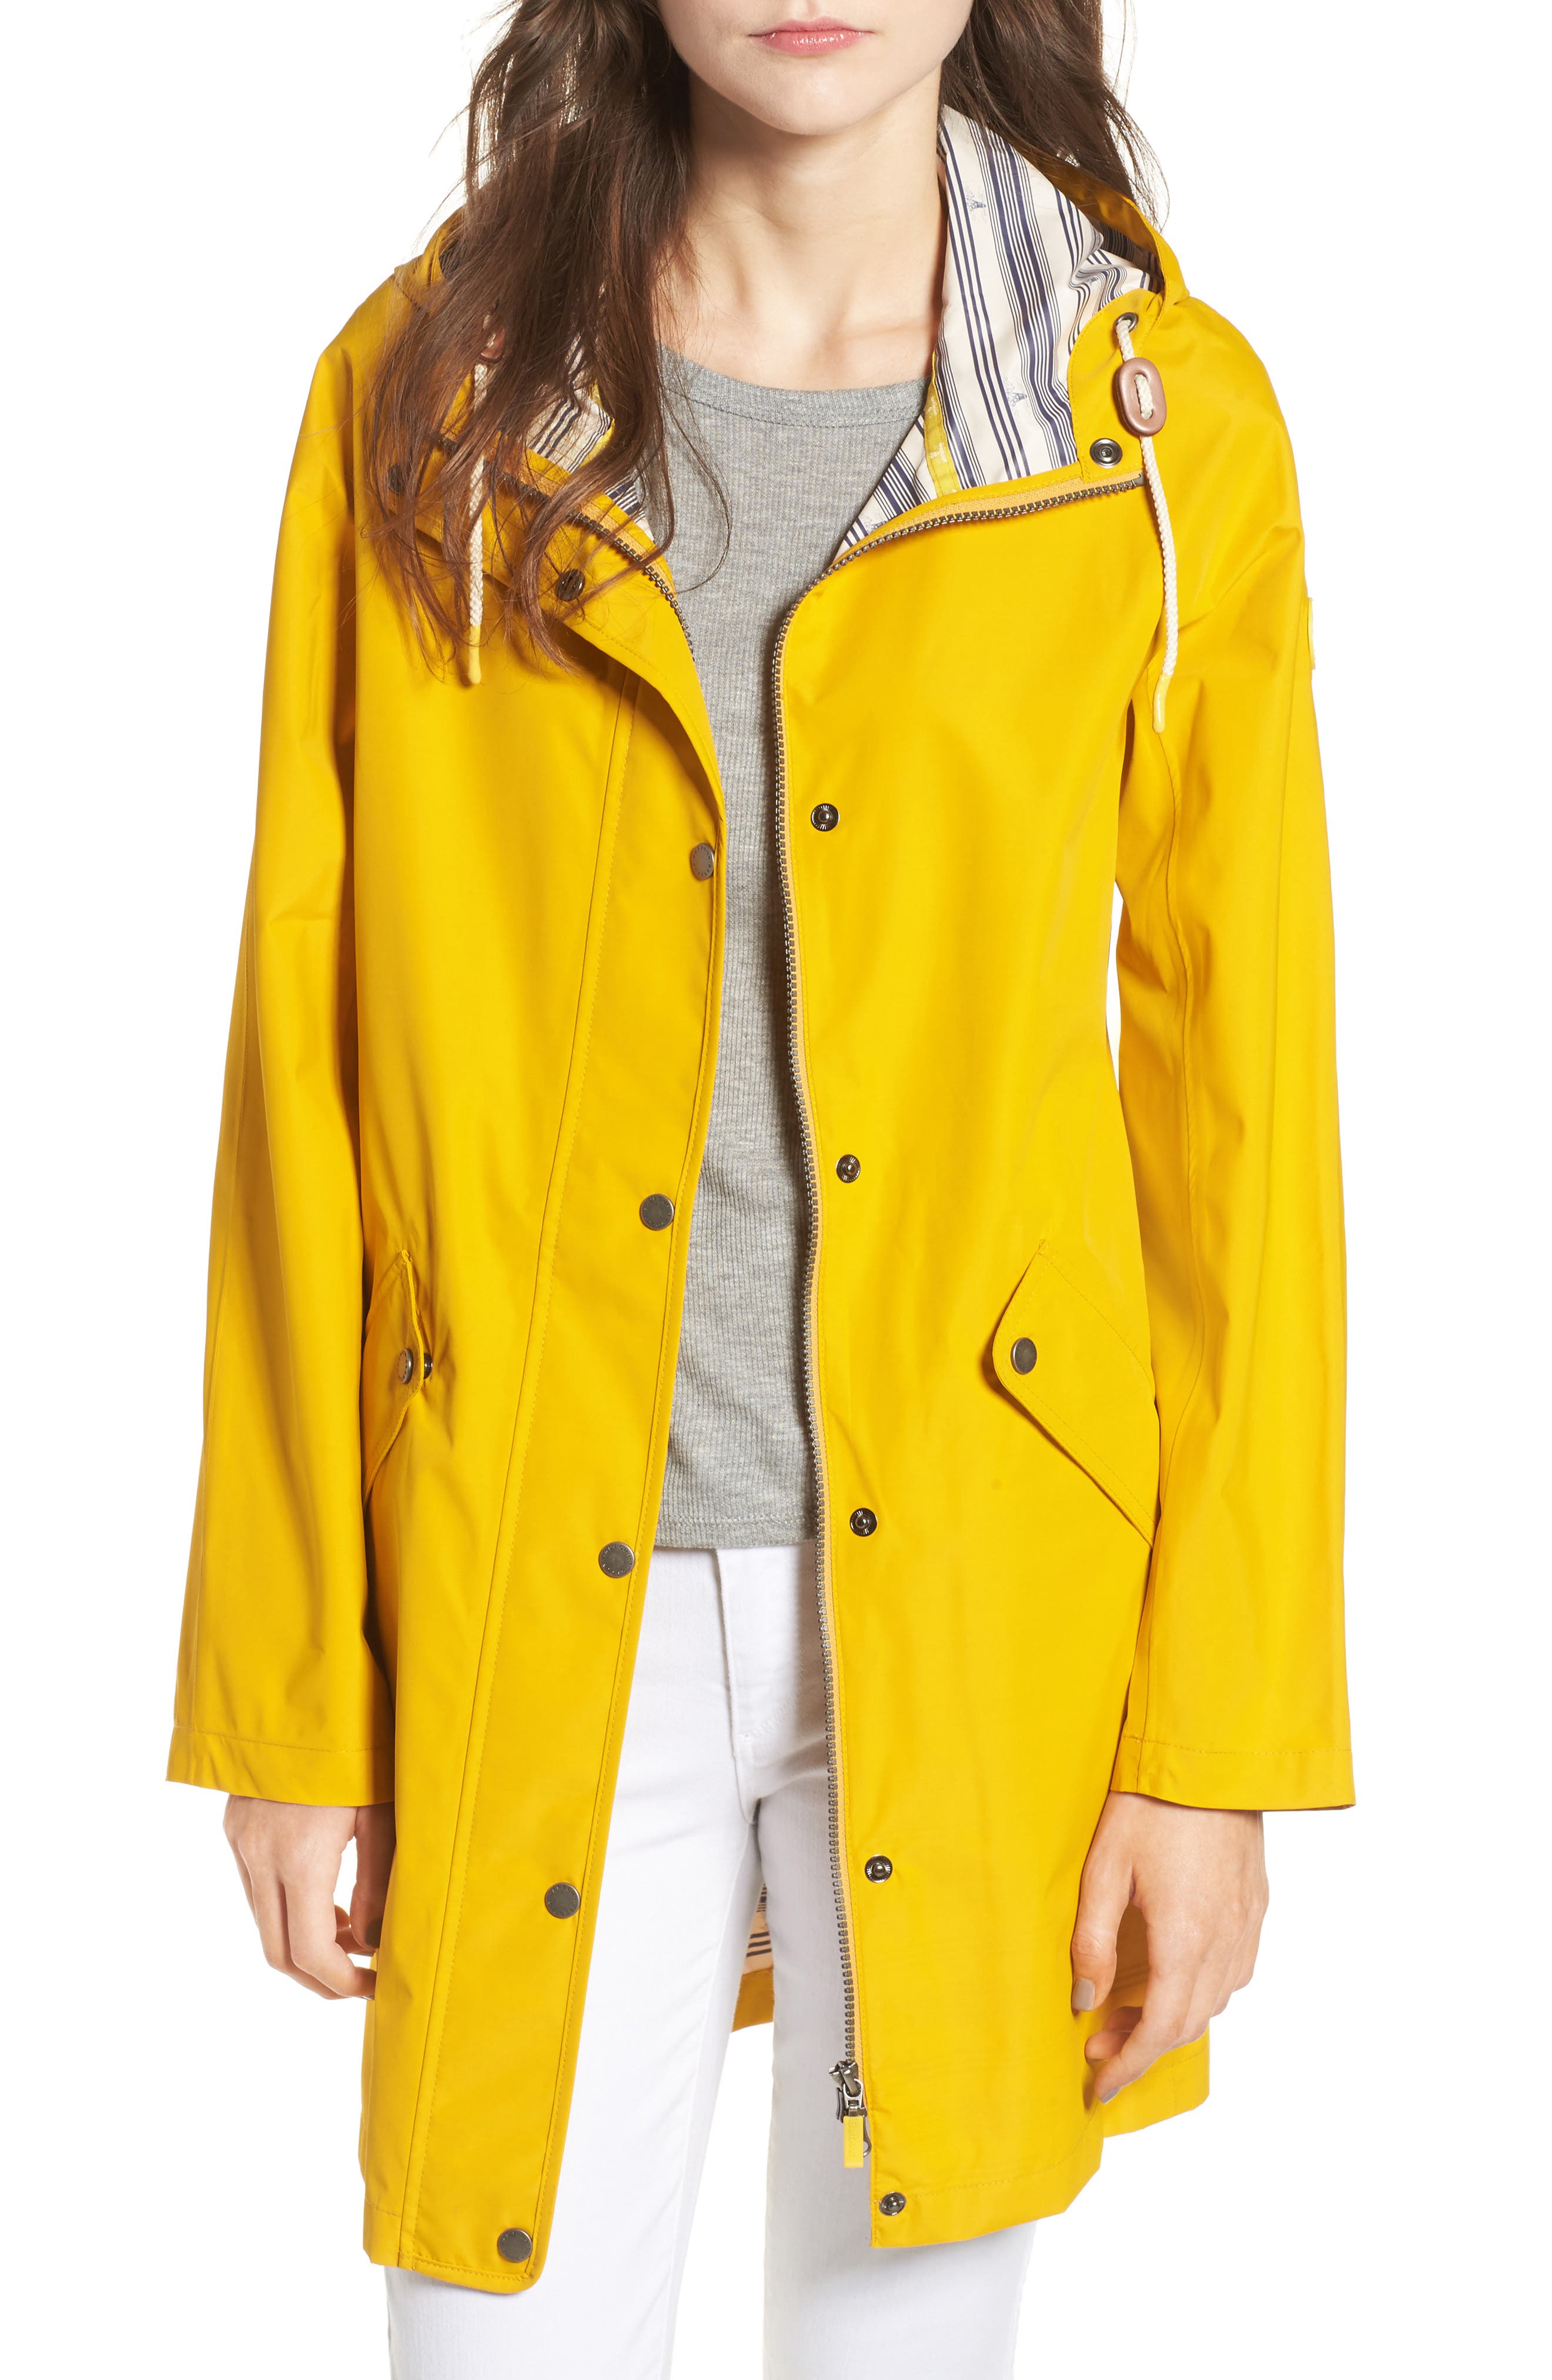 barbour yellow raincoat